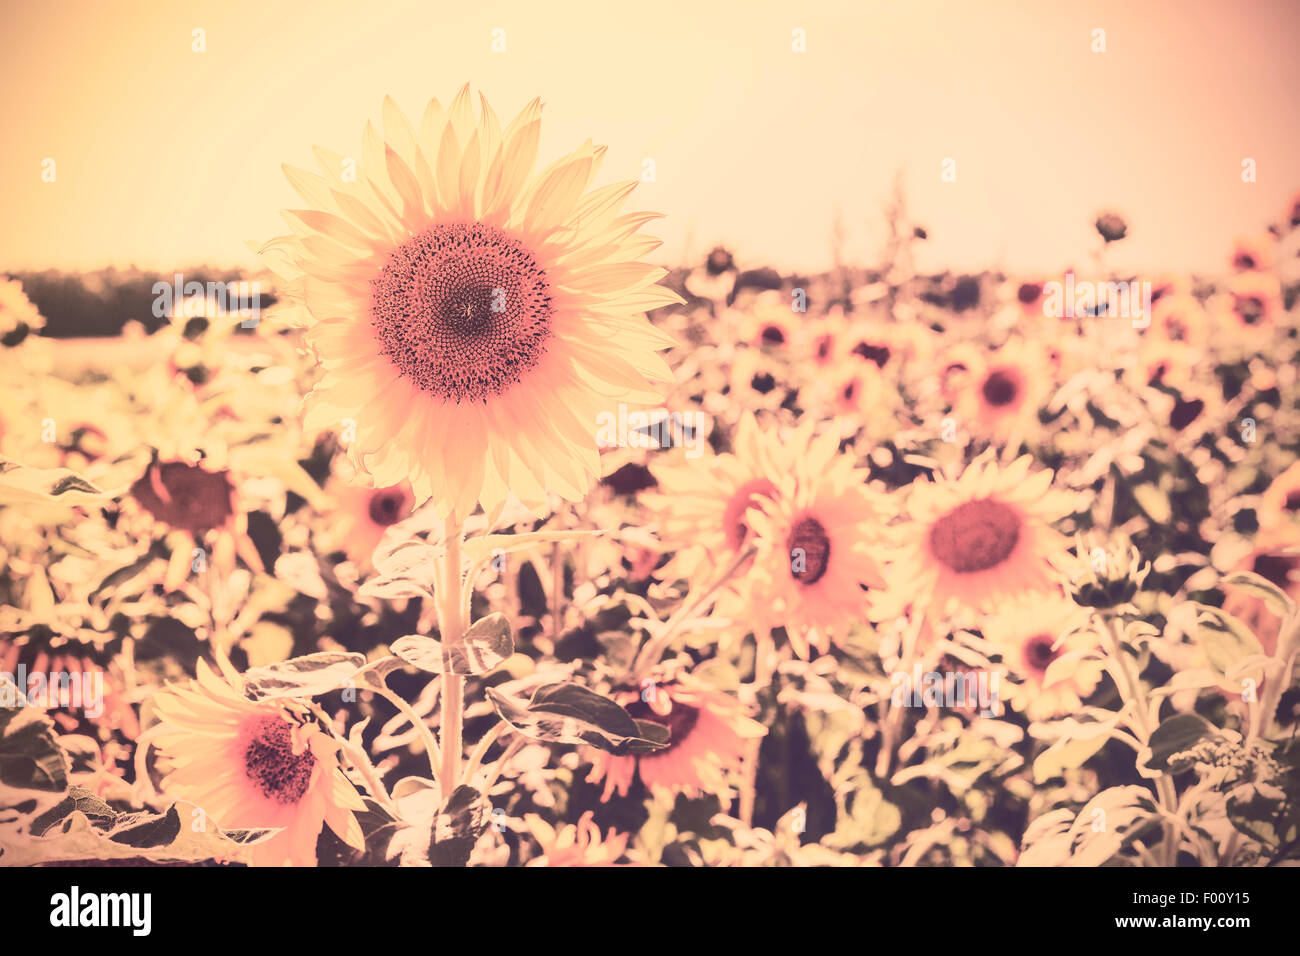 Retro sepia toned nature background made of sunflowers. Stock Photo